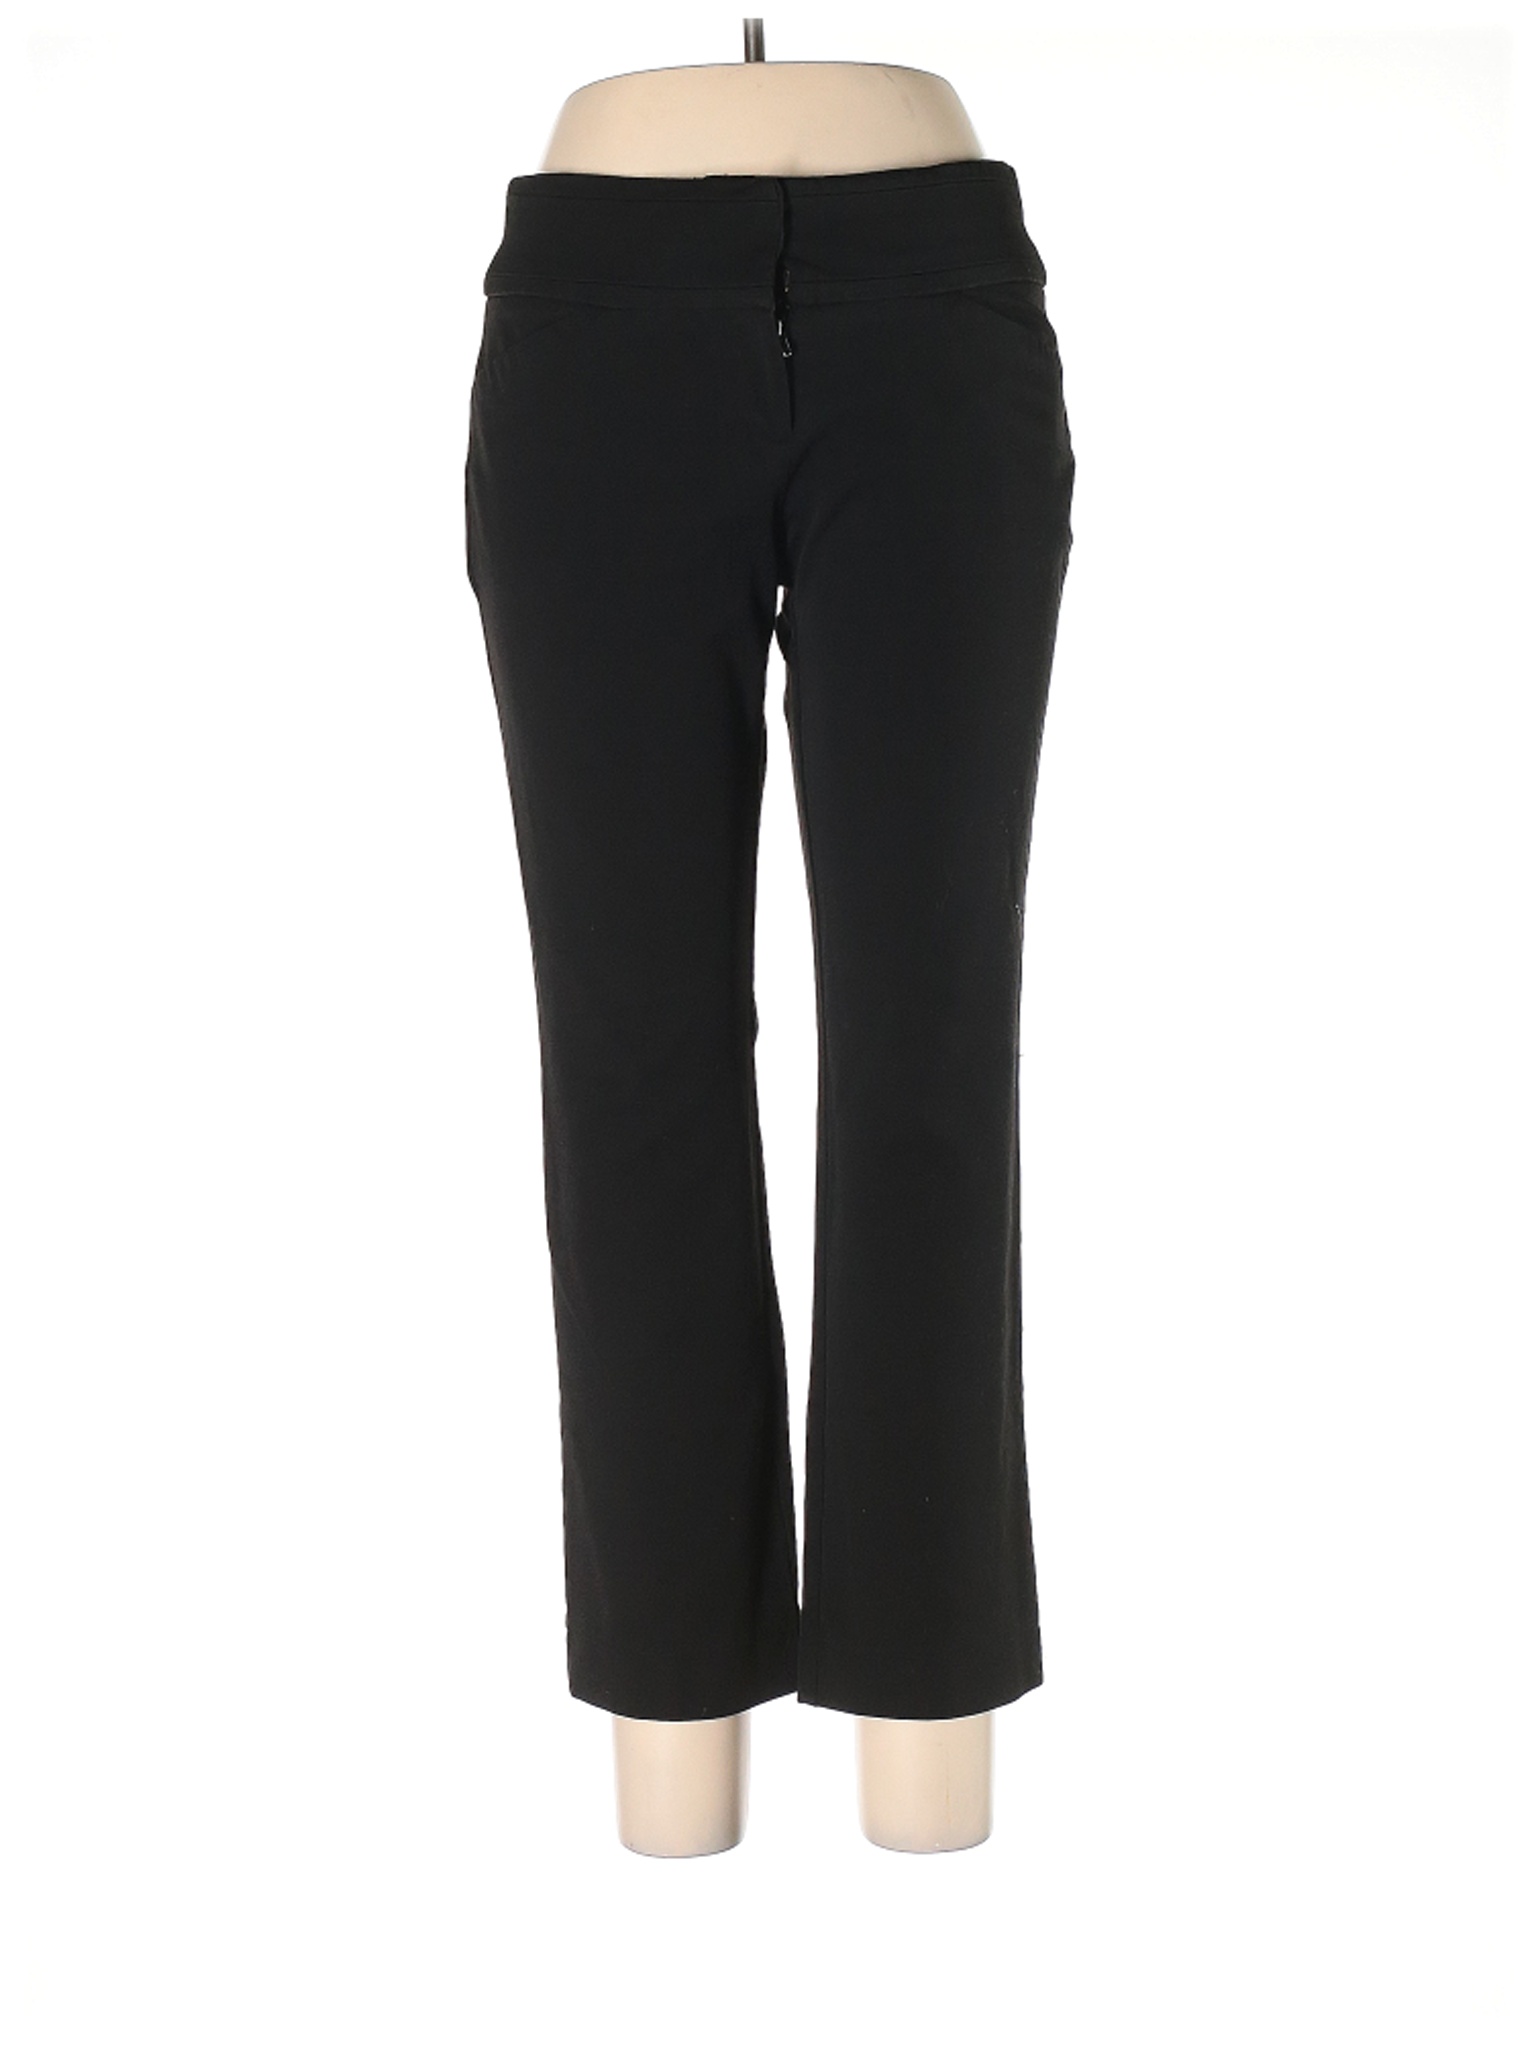 New York & Company Women Black Dress Pants 10 | eBay